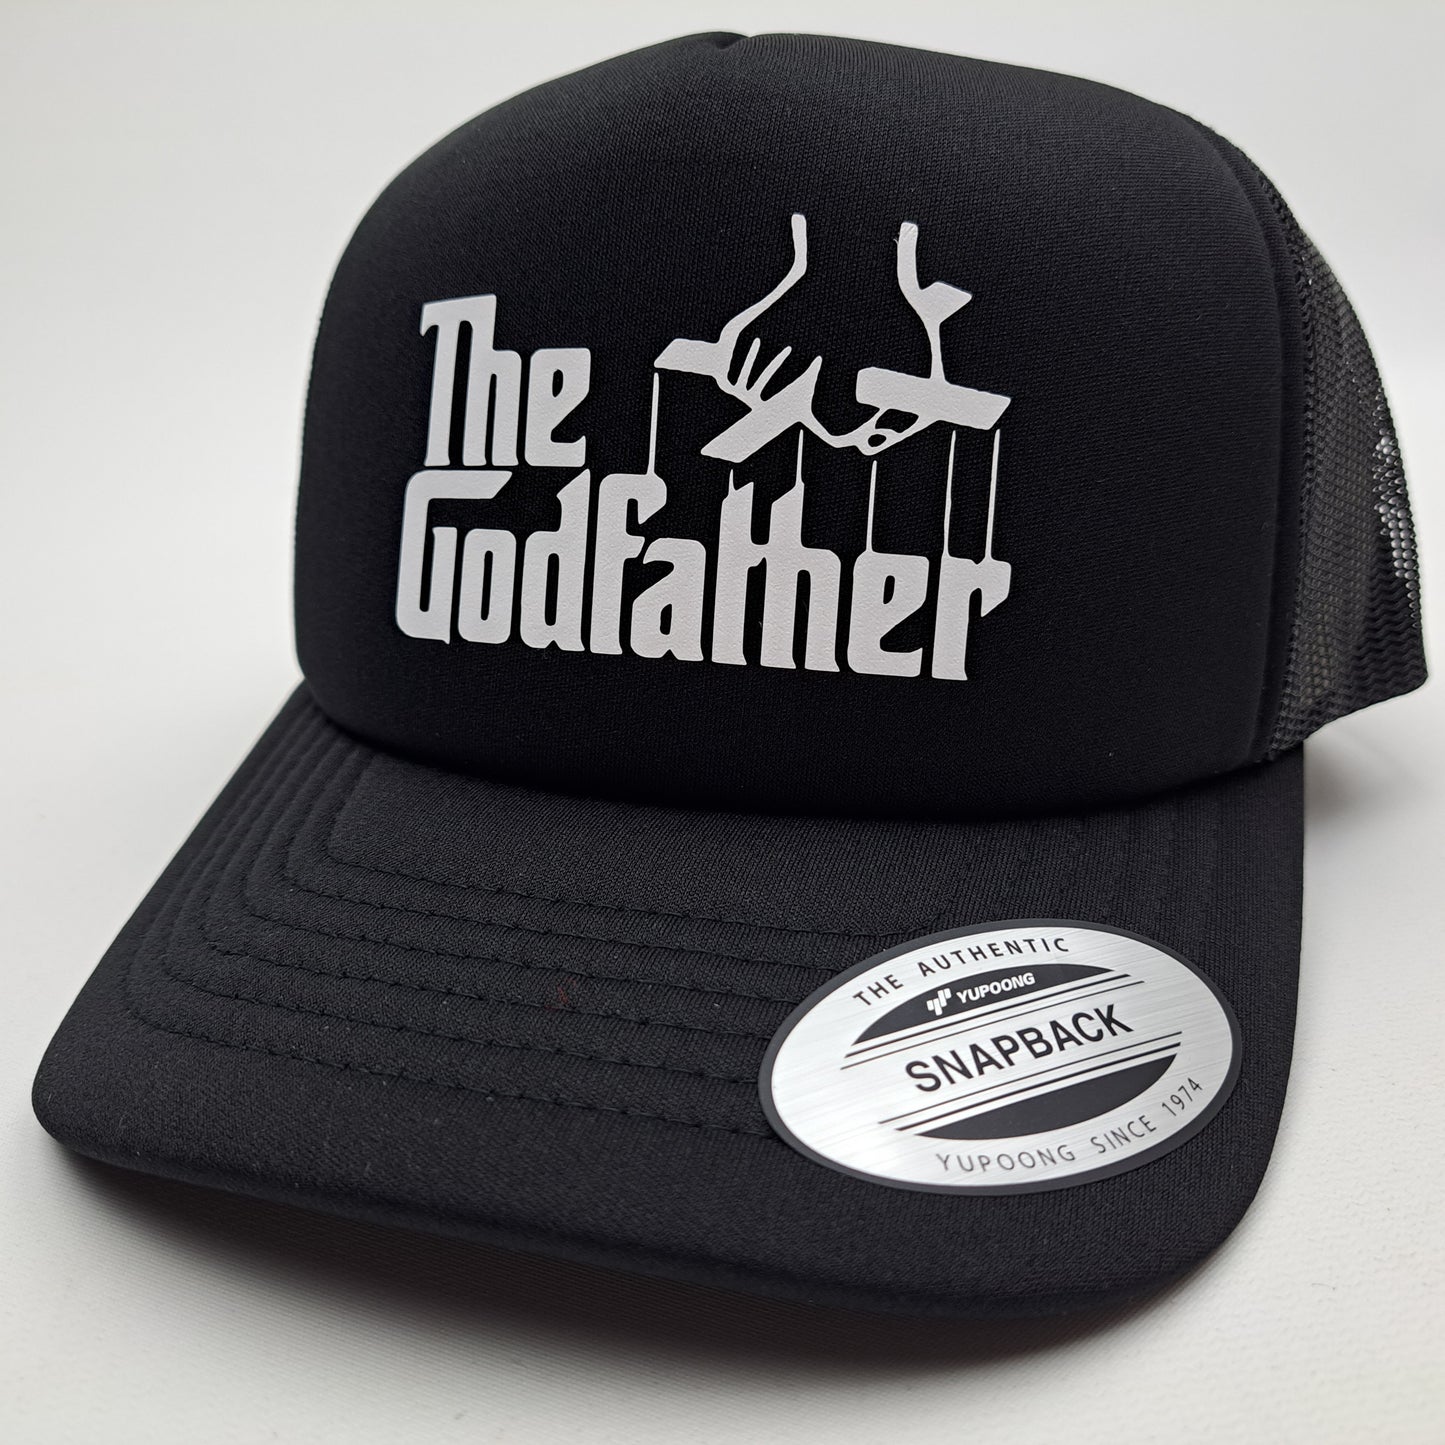 The Godfather Hat Cap Foam Mesh Vintage Trucker Style Snapback Black